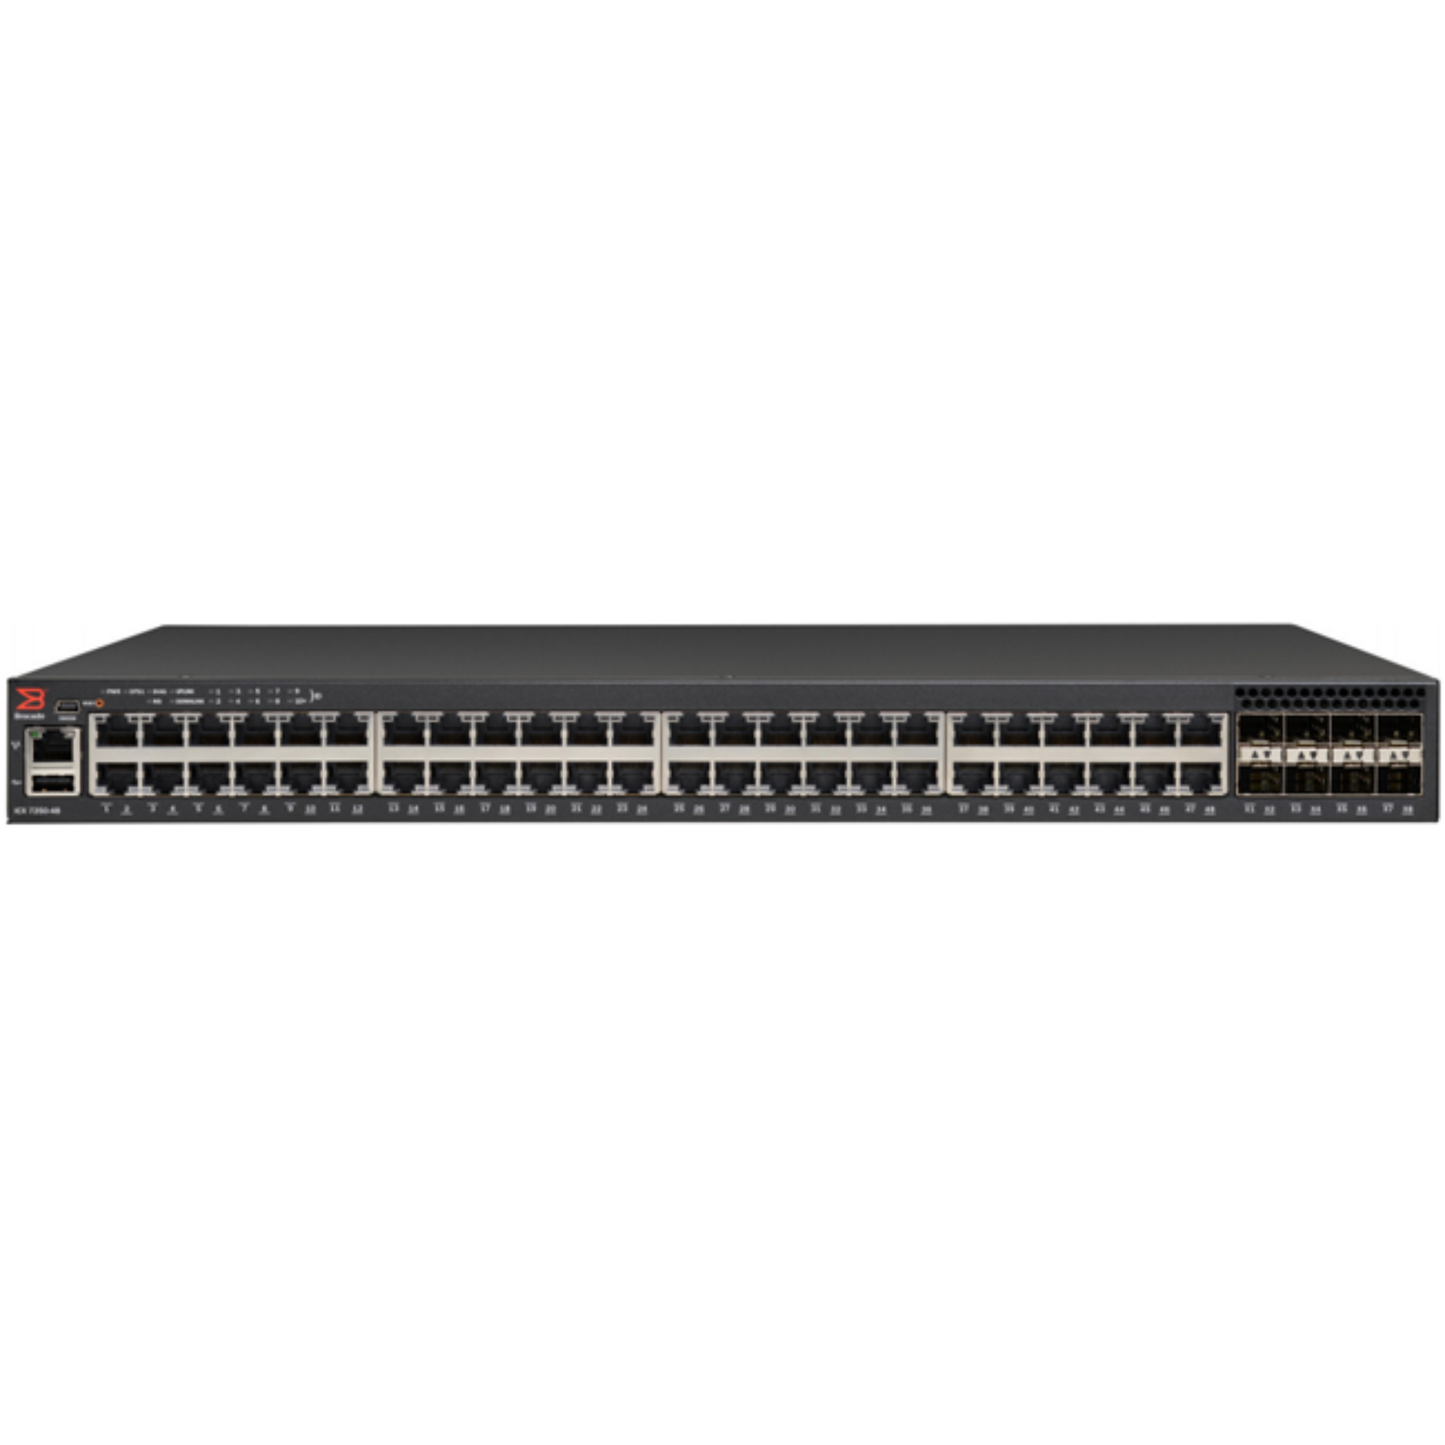 Brocade ICX 7250 48-Port PoE 8x1/10 GbE Ethernet Switch (ICX7250-48P-2X10G)